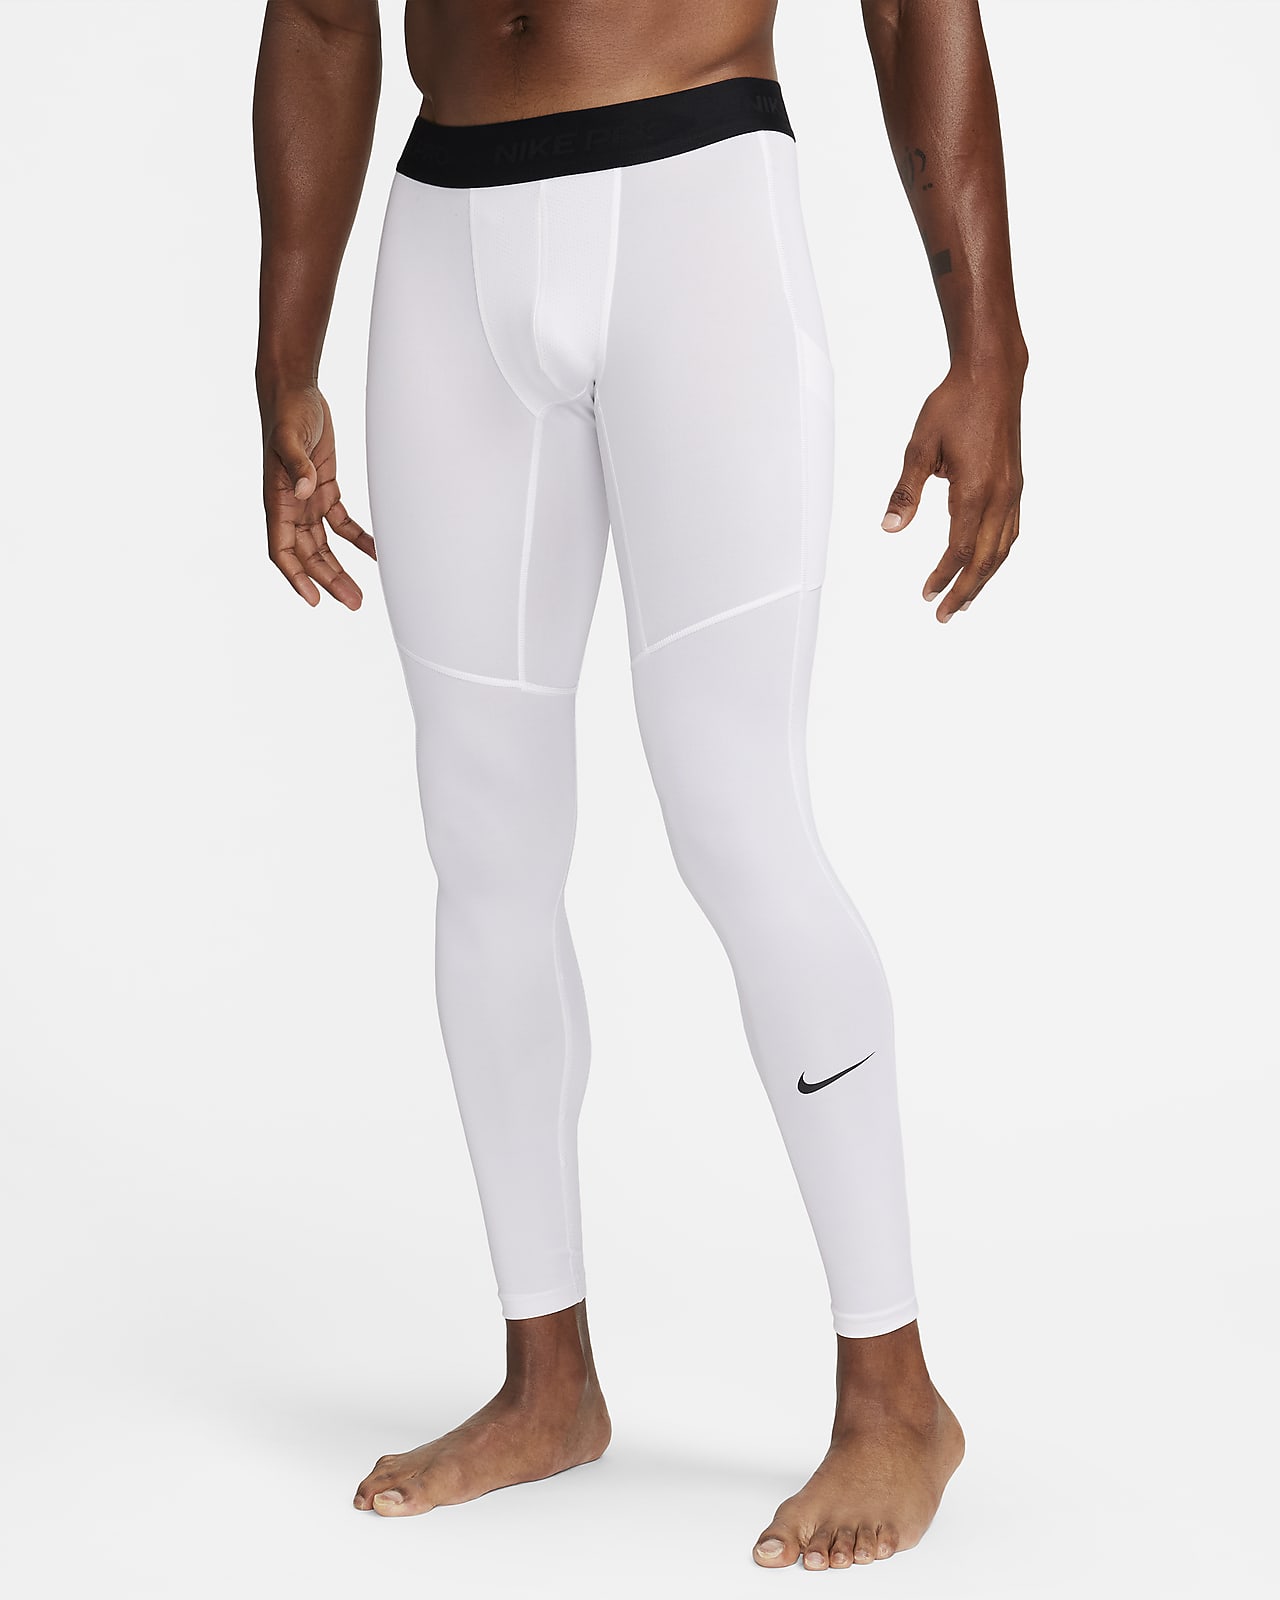 Leggings Nike Multicolour size XS International in Polyester - 40909910